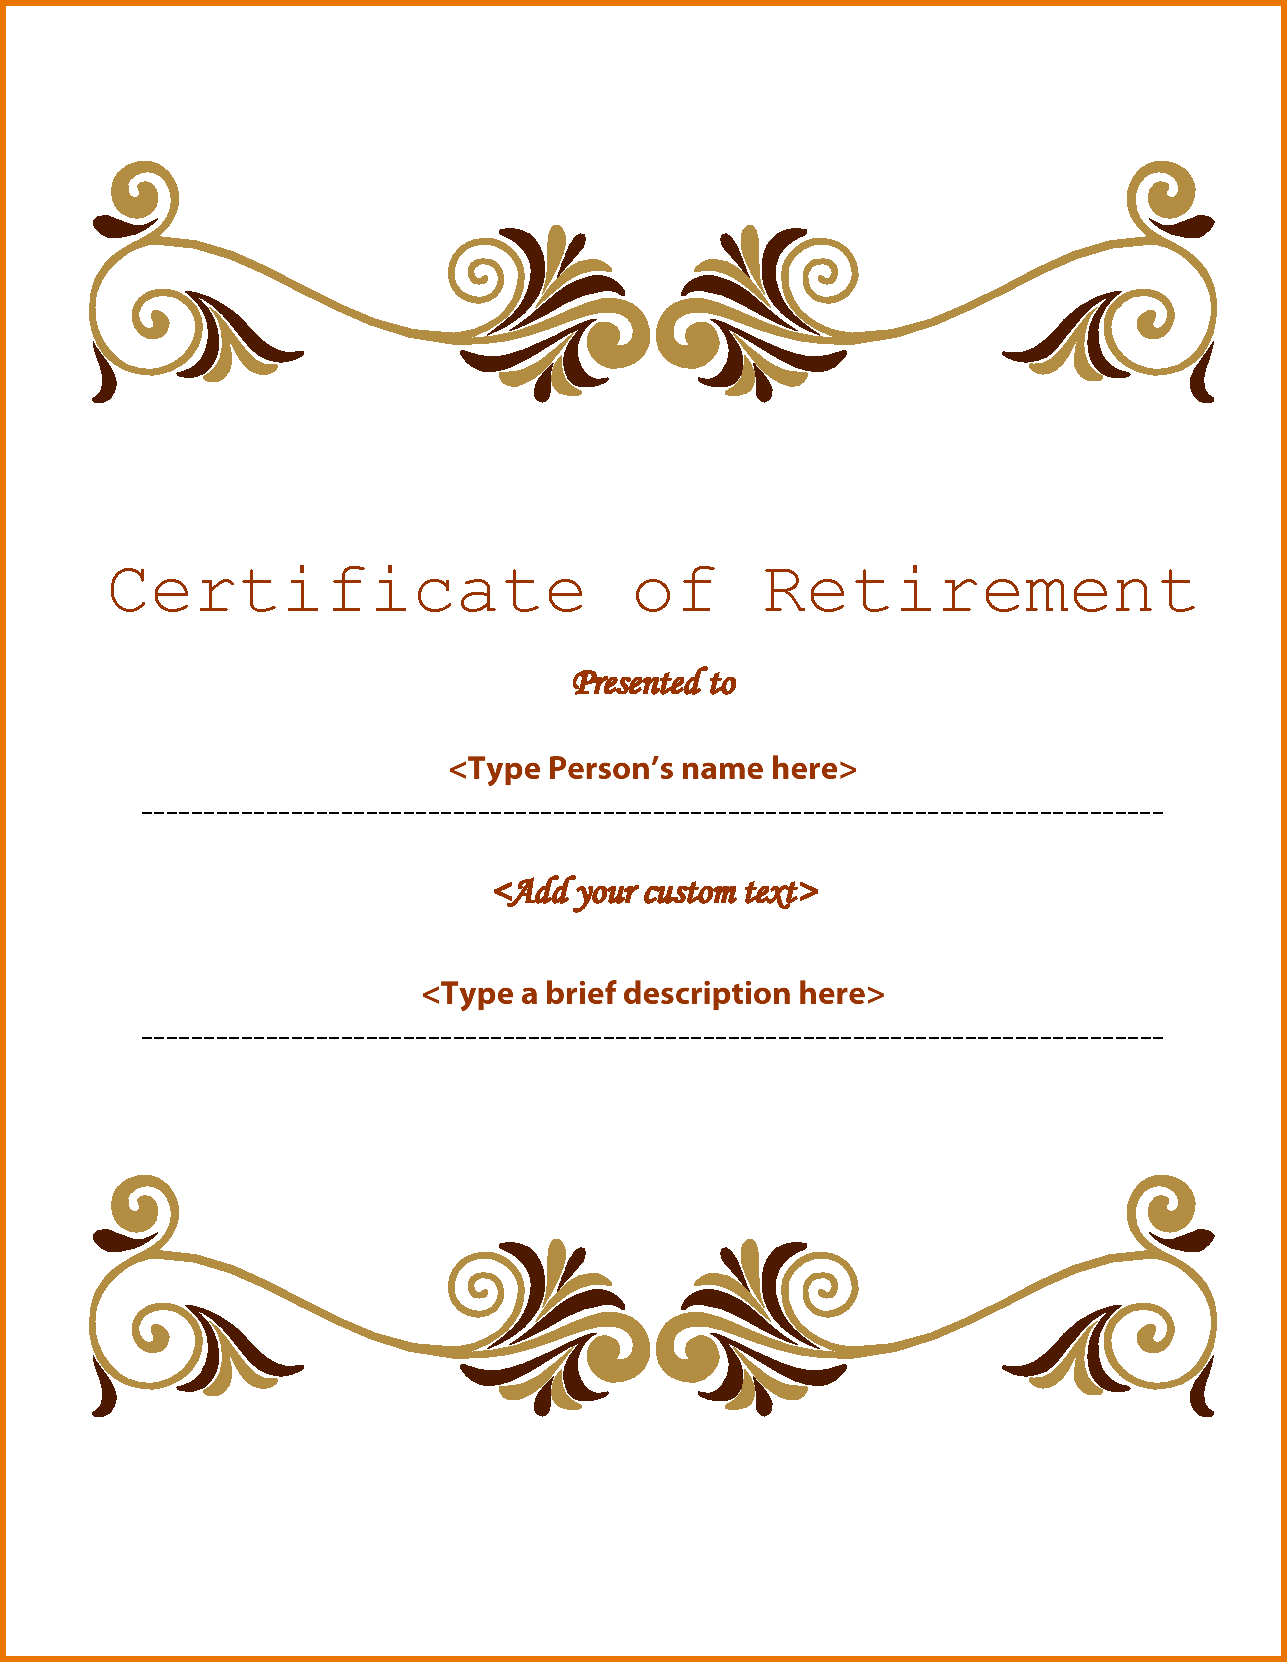 Retirement Certificate Template.65840807 | Scope Of Work Regarding Retirement Certificate Template